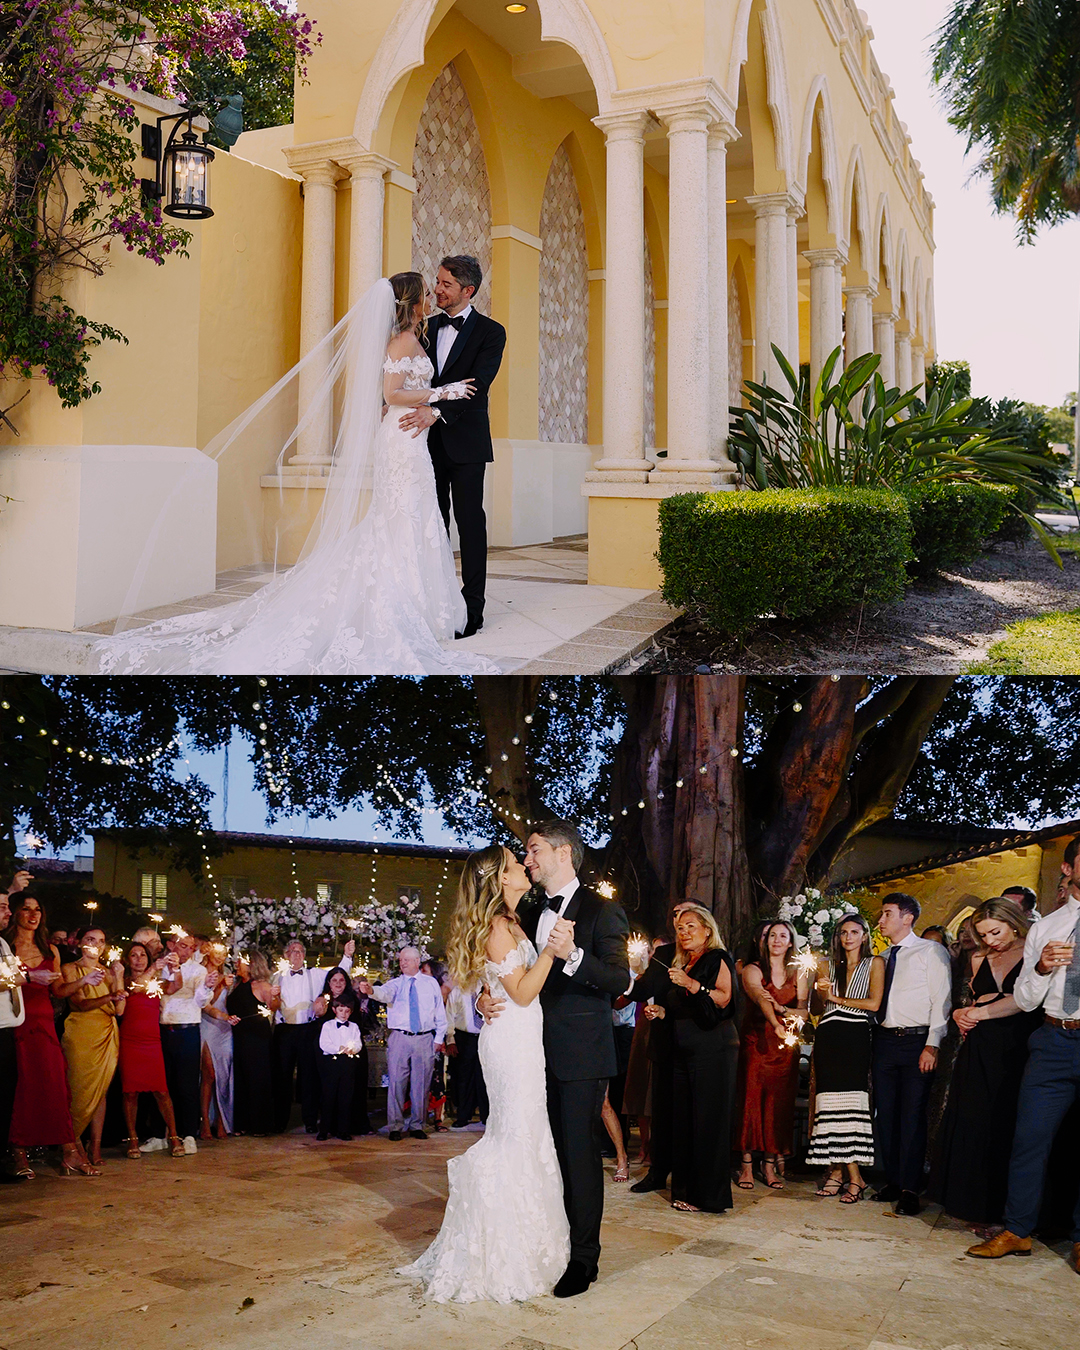 Danielle and Drew, wedding at The Addison Boca Raton, FL - image 4